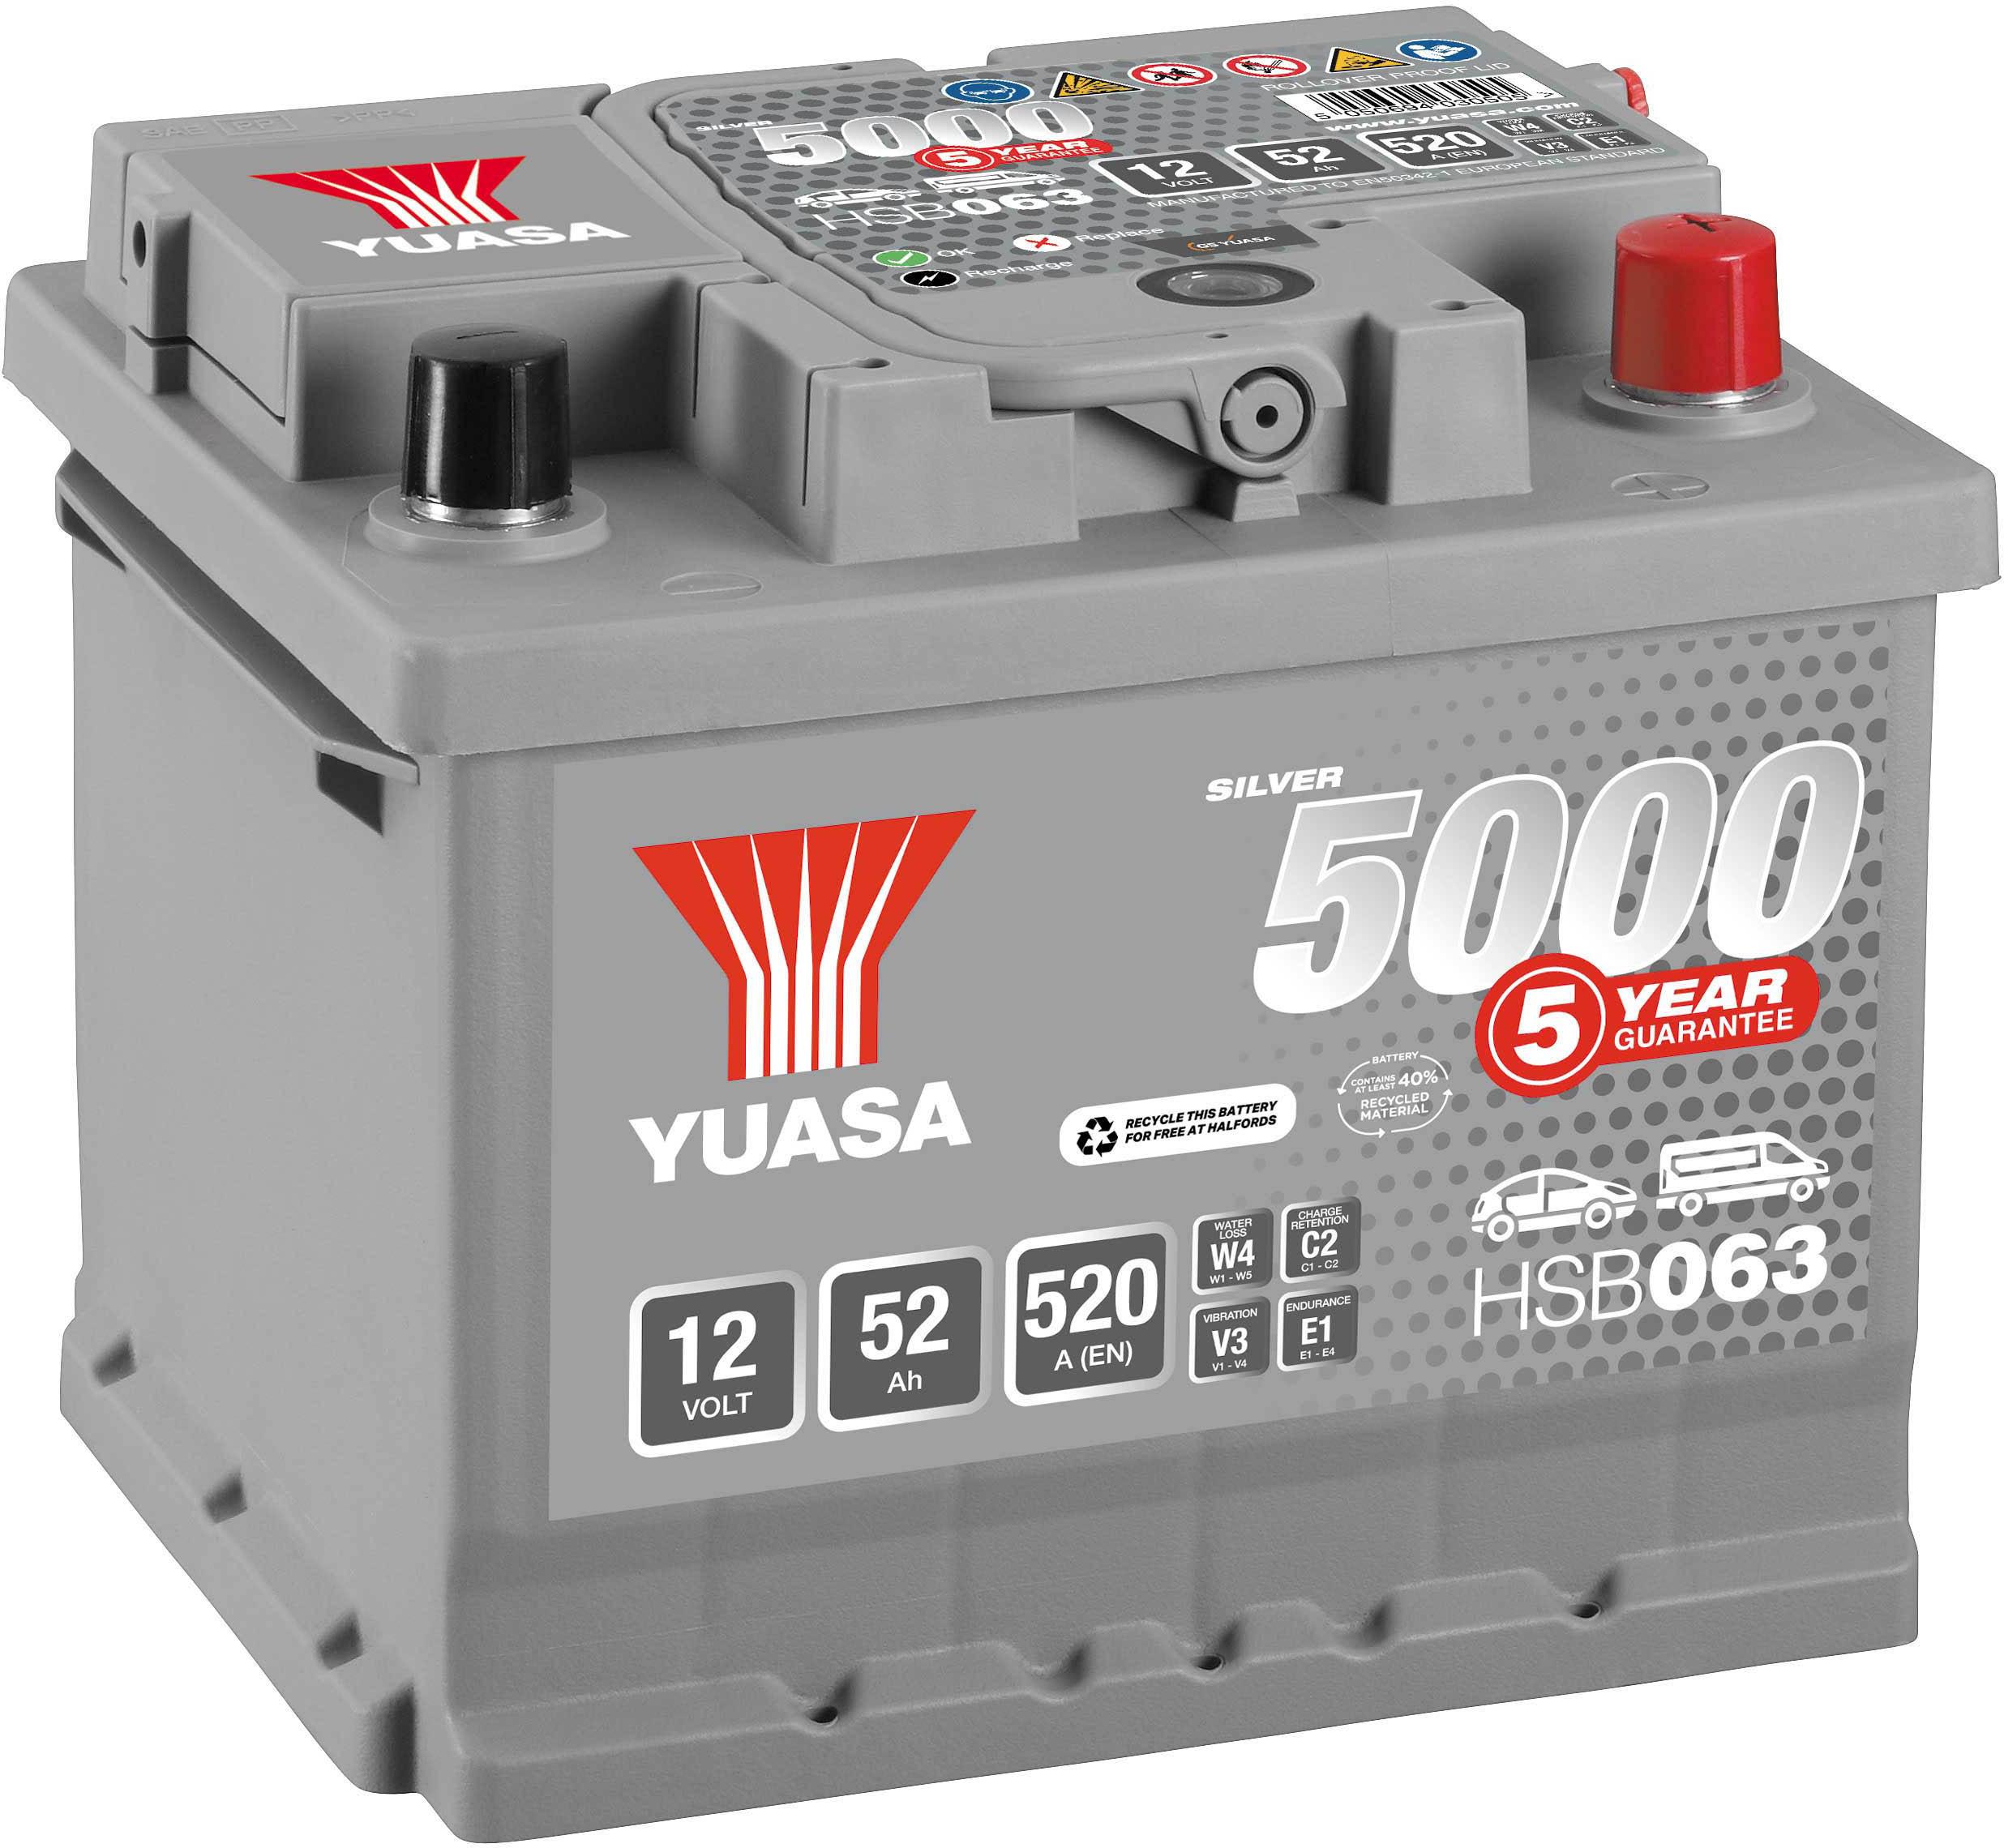 Yuasa Hsb063 Silver 12V Car Battery 5 Year Guarantee